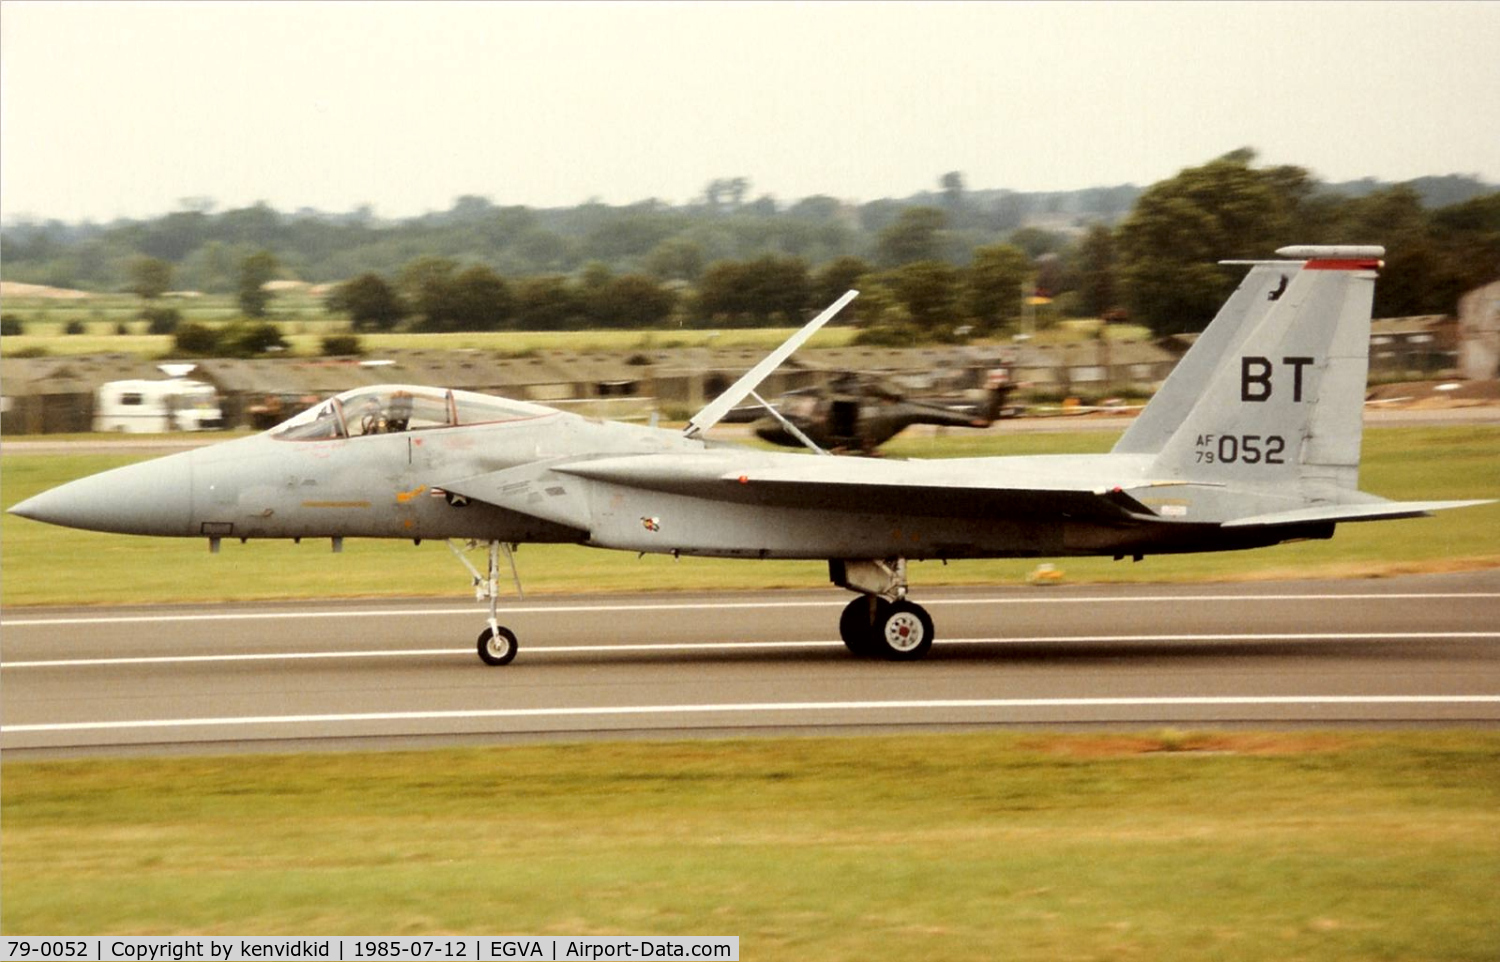 79-0052, 1979 McDonnell Douglas F-15C Eagle C/N 0595/C121, US Air Force arriving at IAT.